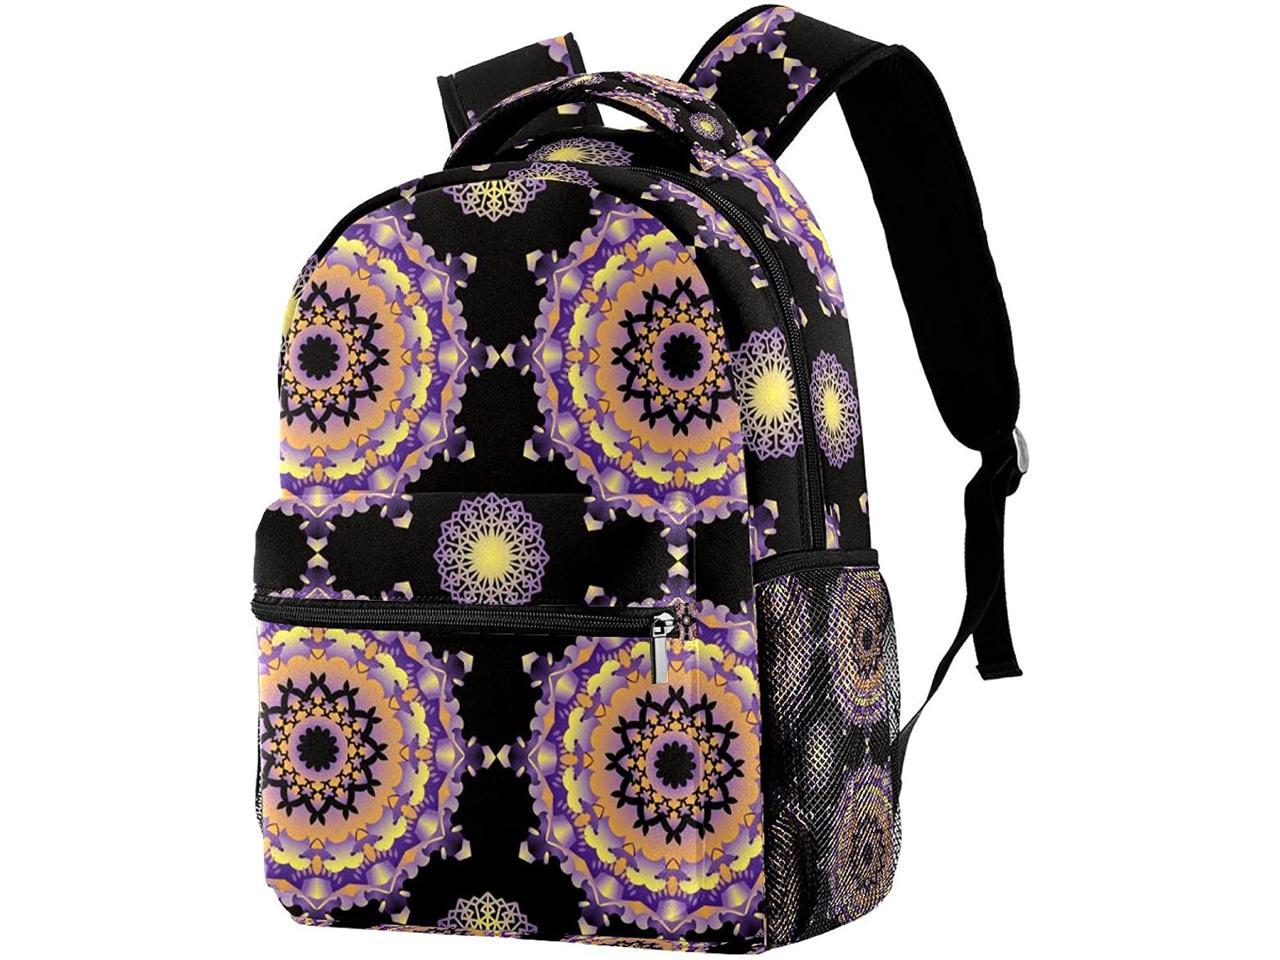 Backpack School Bag Casual Travel Daypack Bookbag,Student Sports Bag Gifts for Men Women Teenage Girl BoyRucksack Tropical Leaves Sloth Flowers